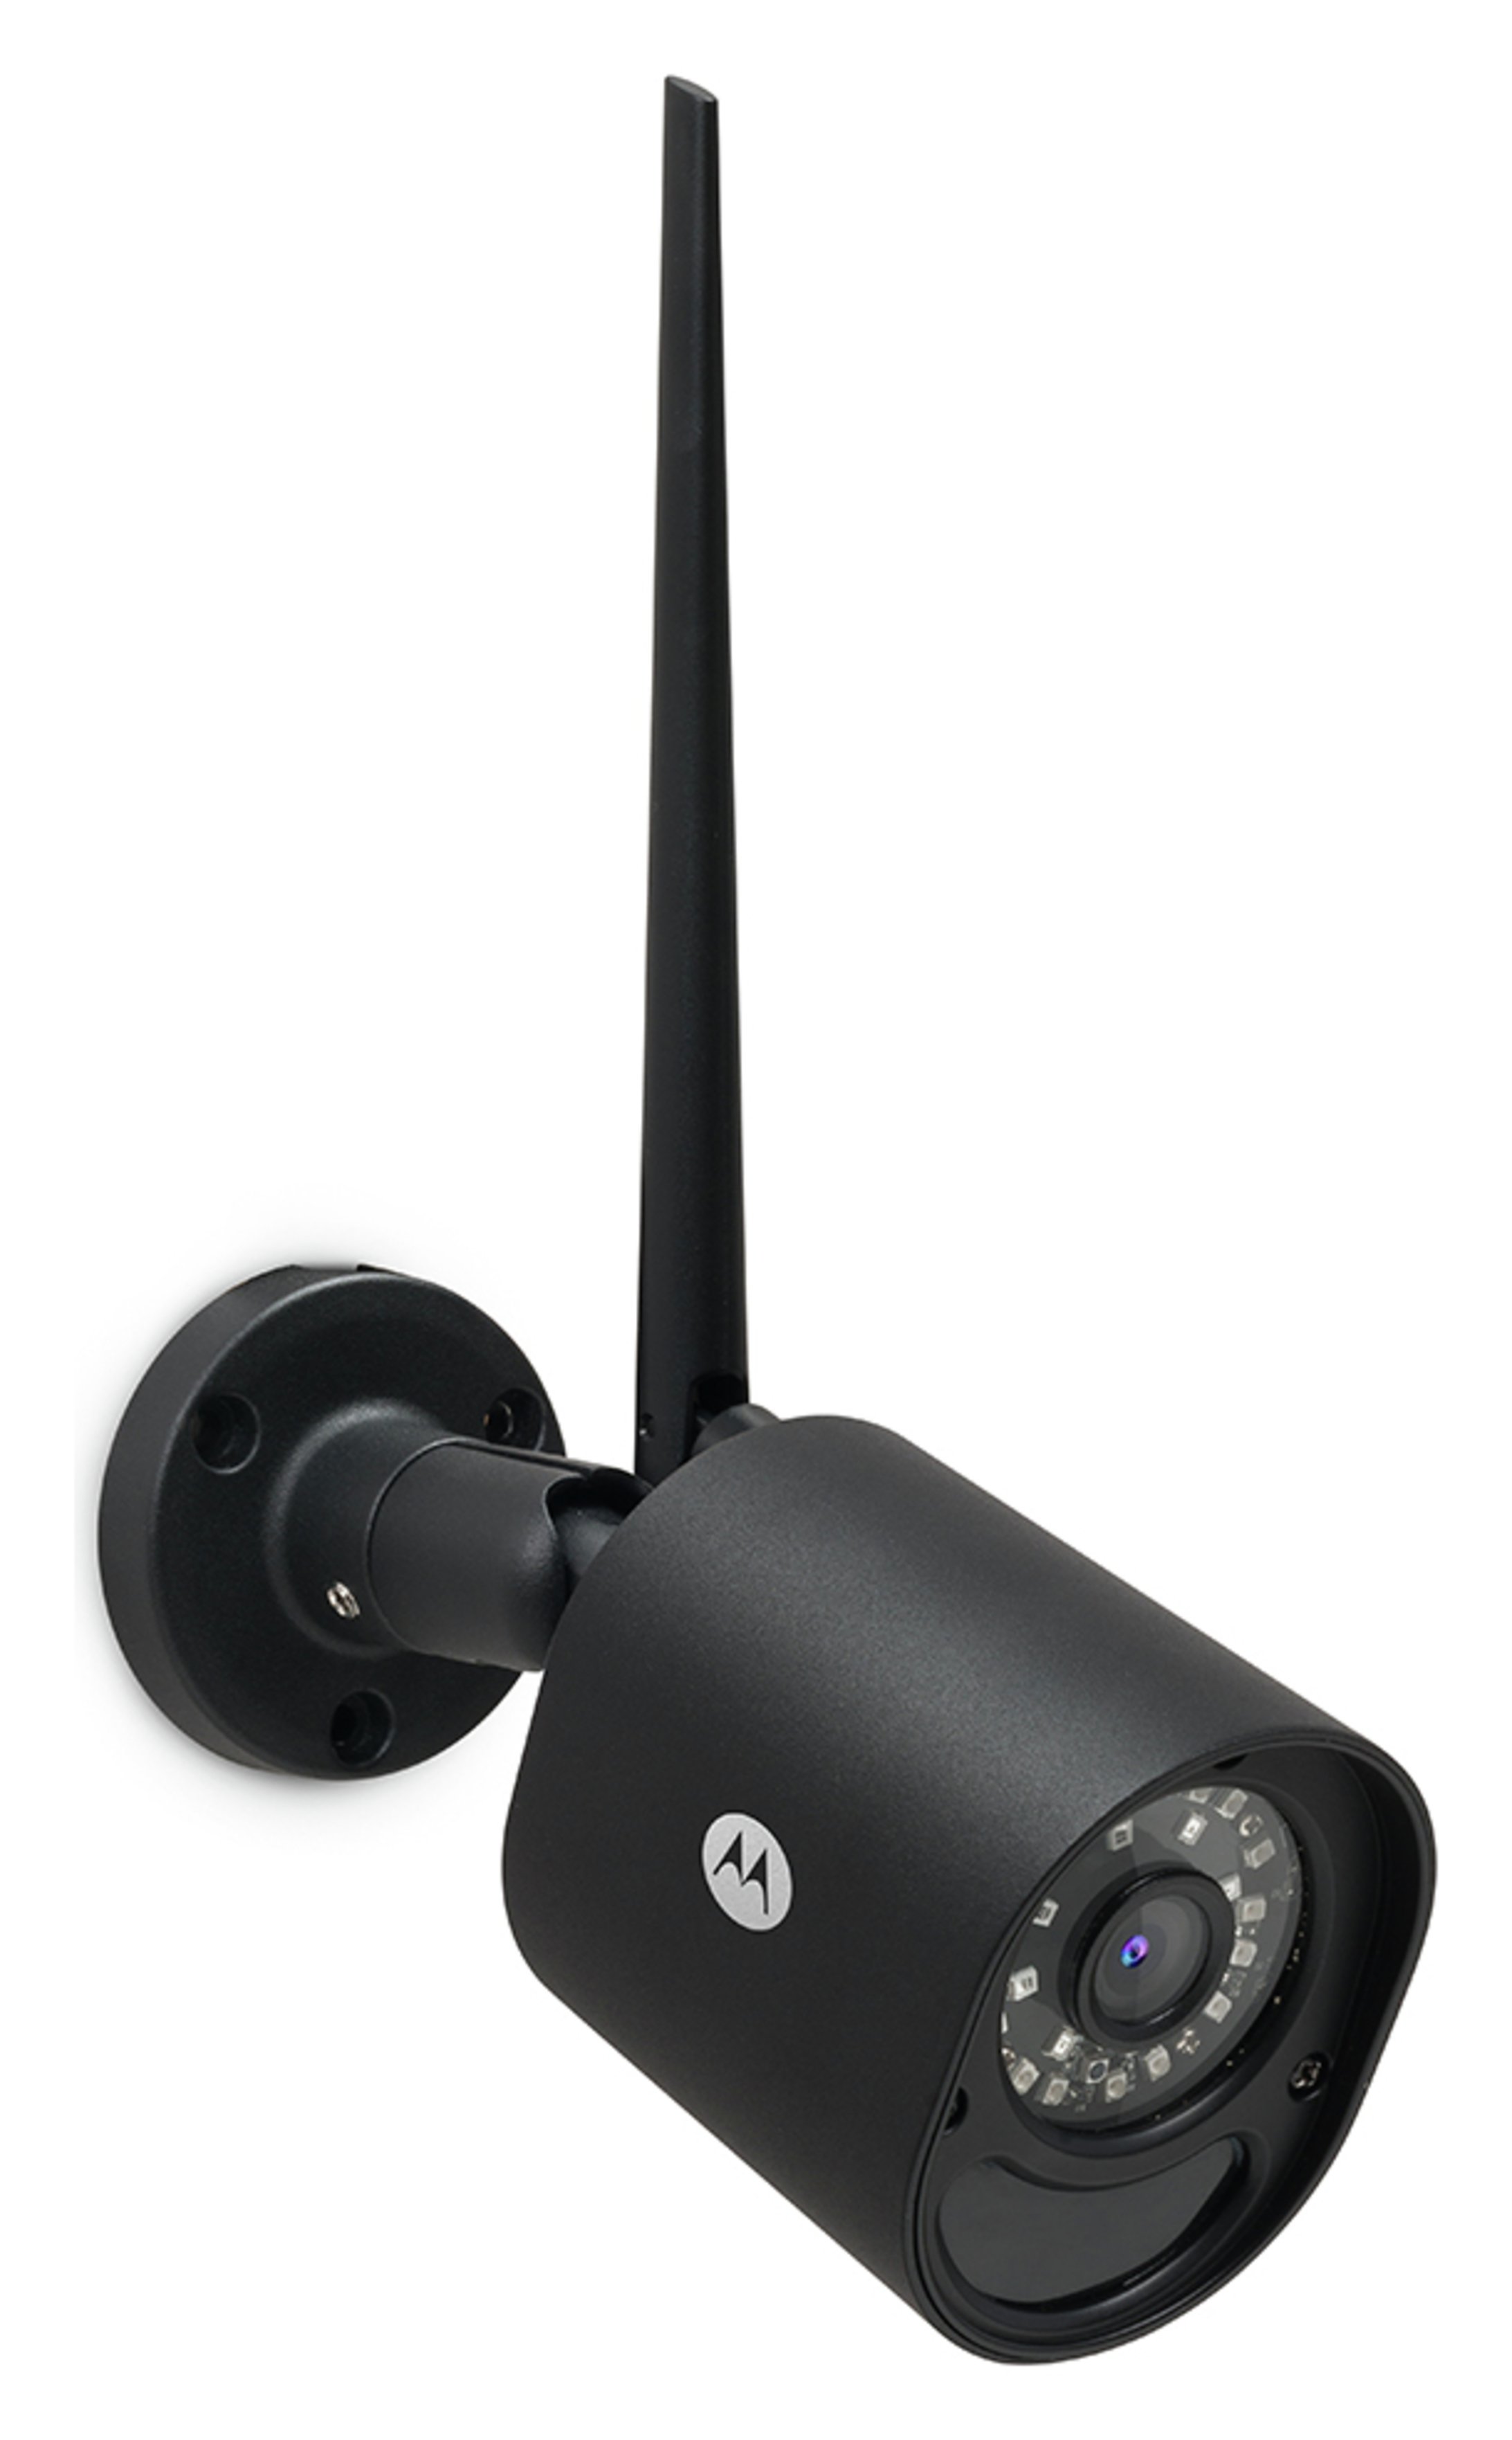 Motorola Focus 72 Connect CCTV Camera review